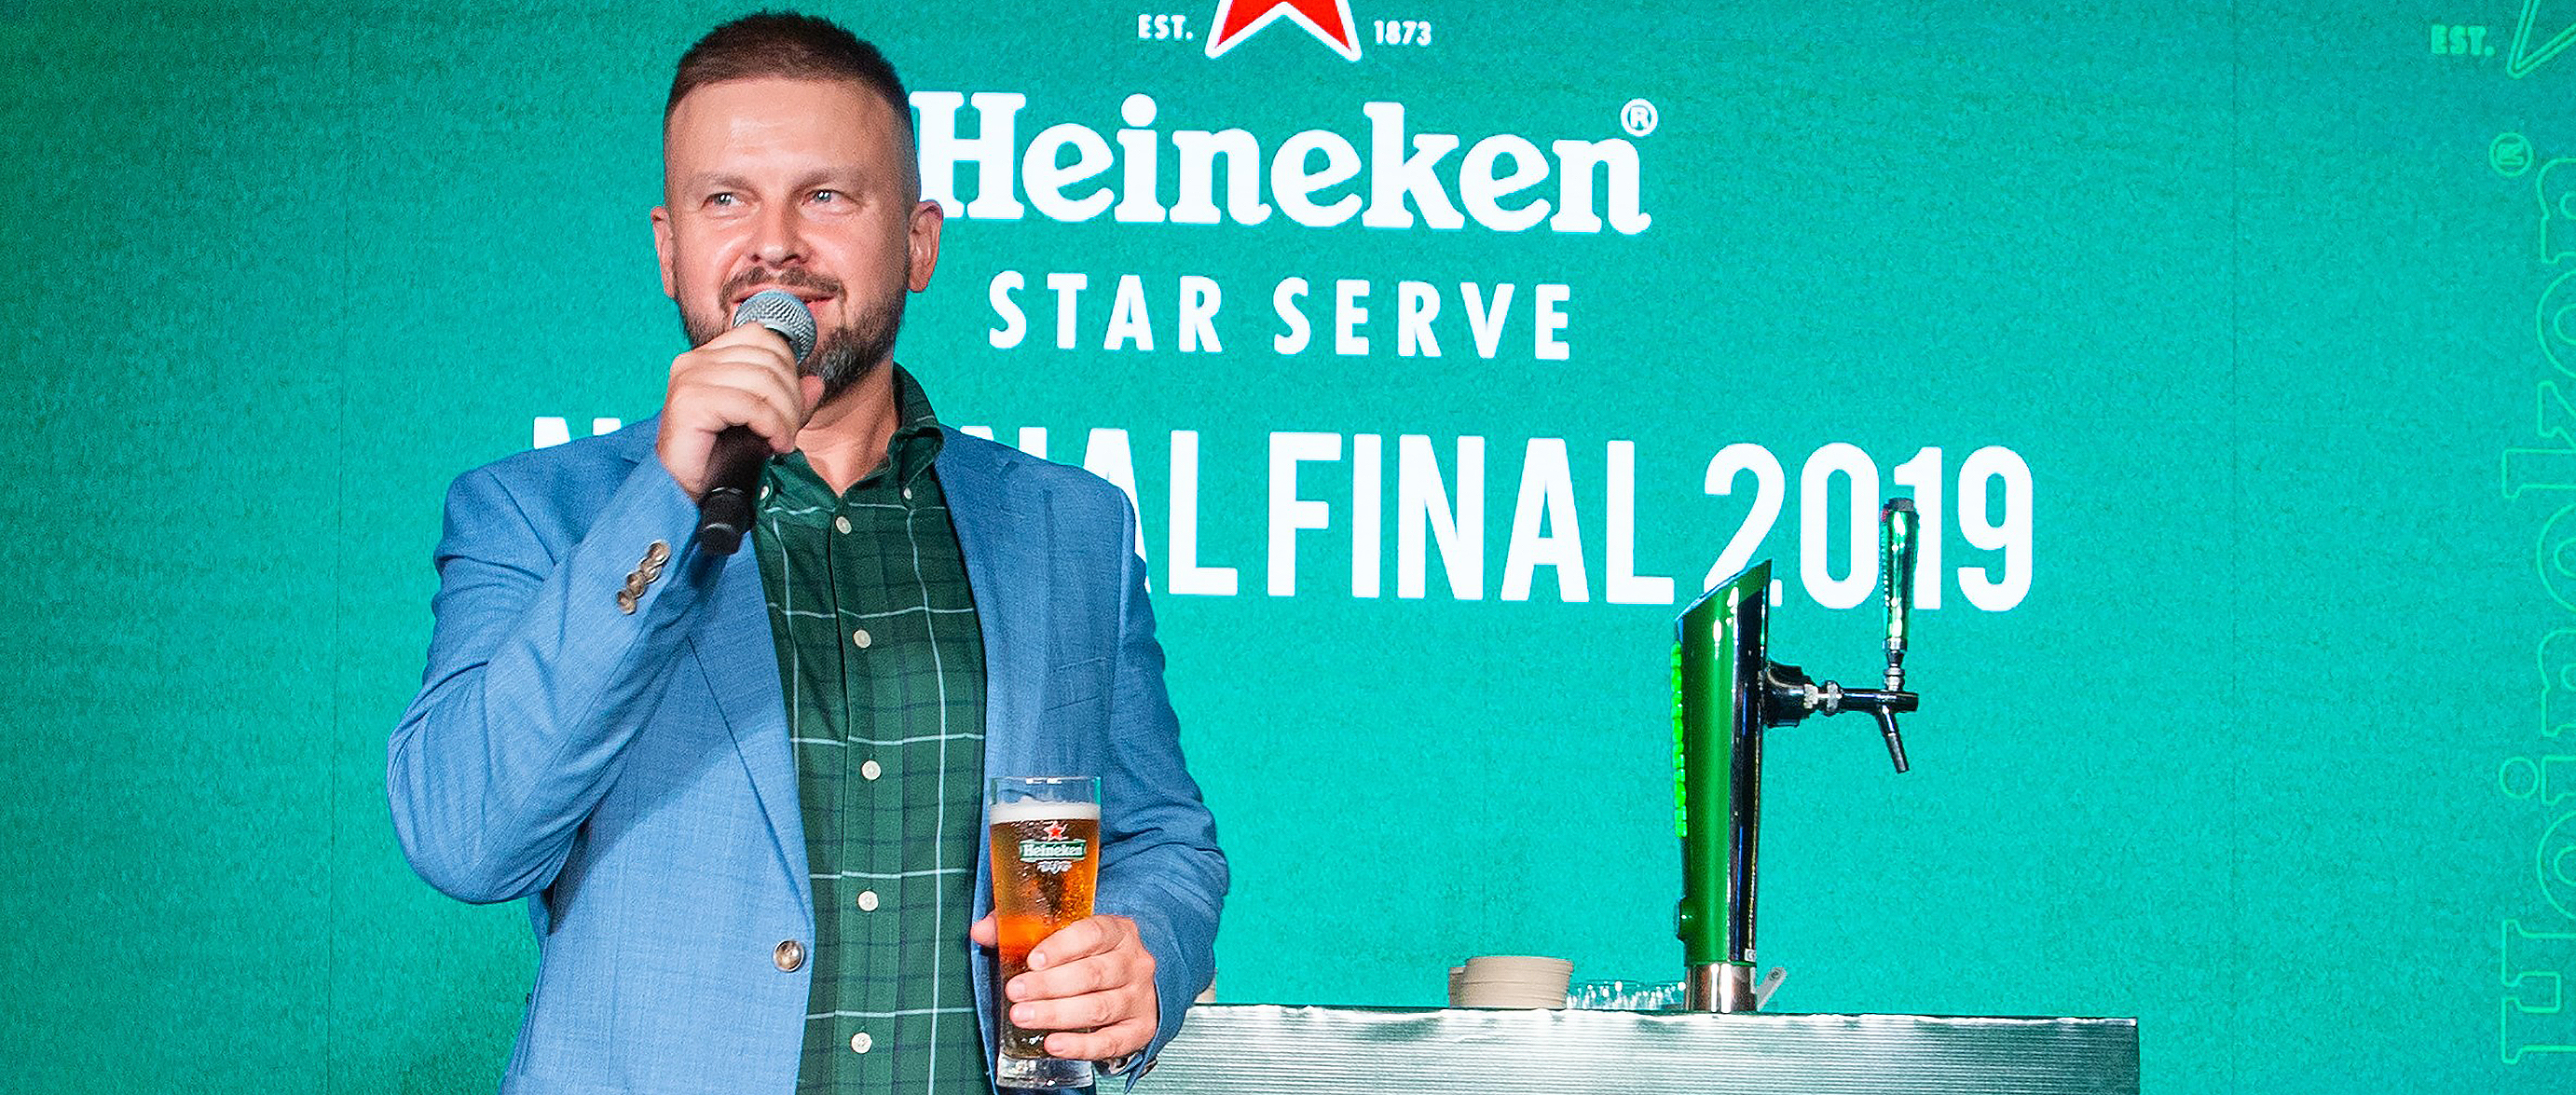 Heineken Star Serve National Final 2019_07-v3